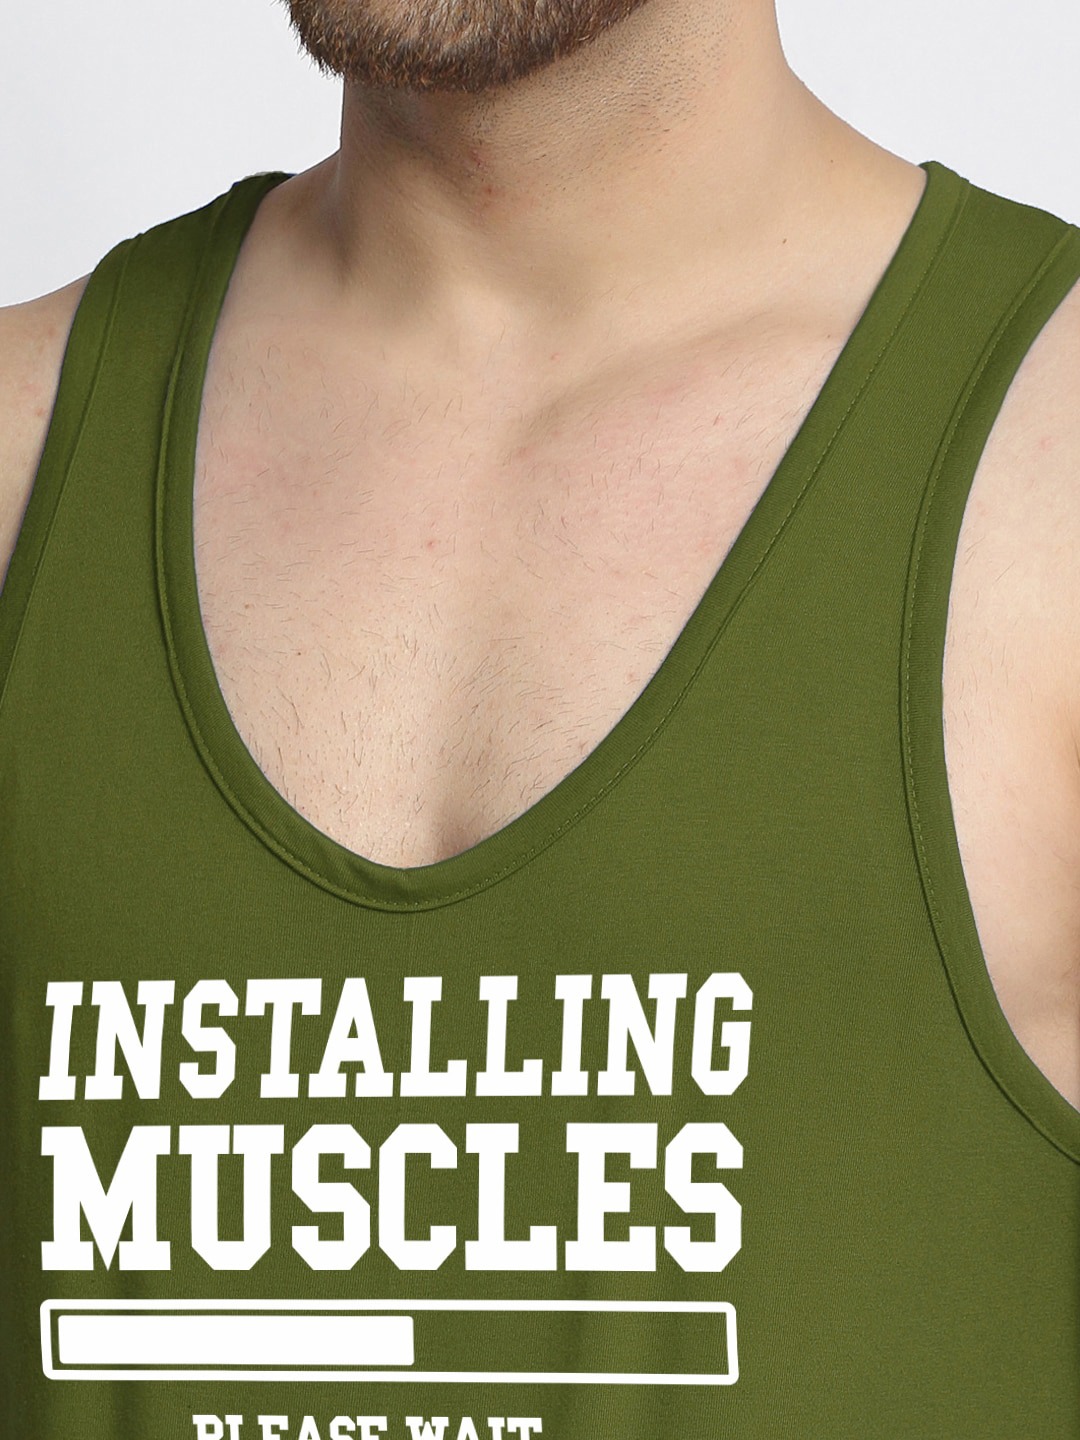 Clothing Innerwear Vests | Friskers Men Olive-Green & White Printed Cotton Apple Cut Gym Vest C105-34-S - XA19154